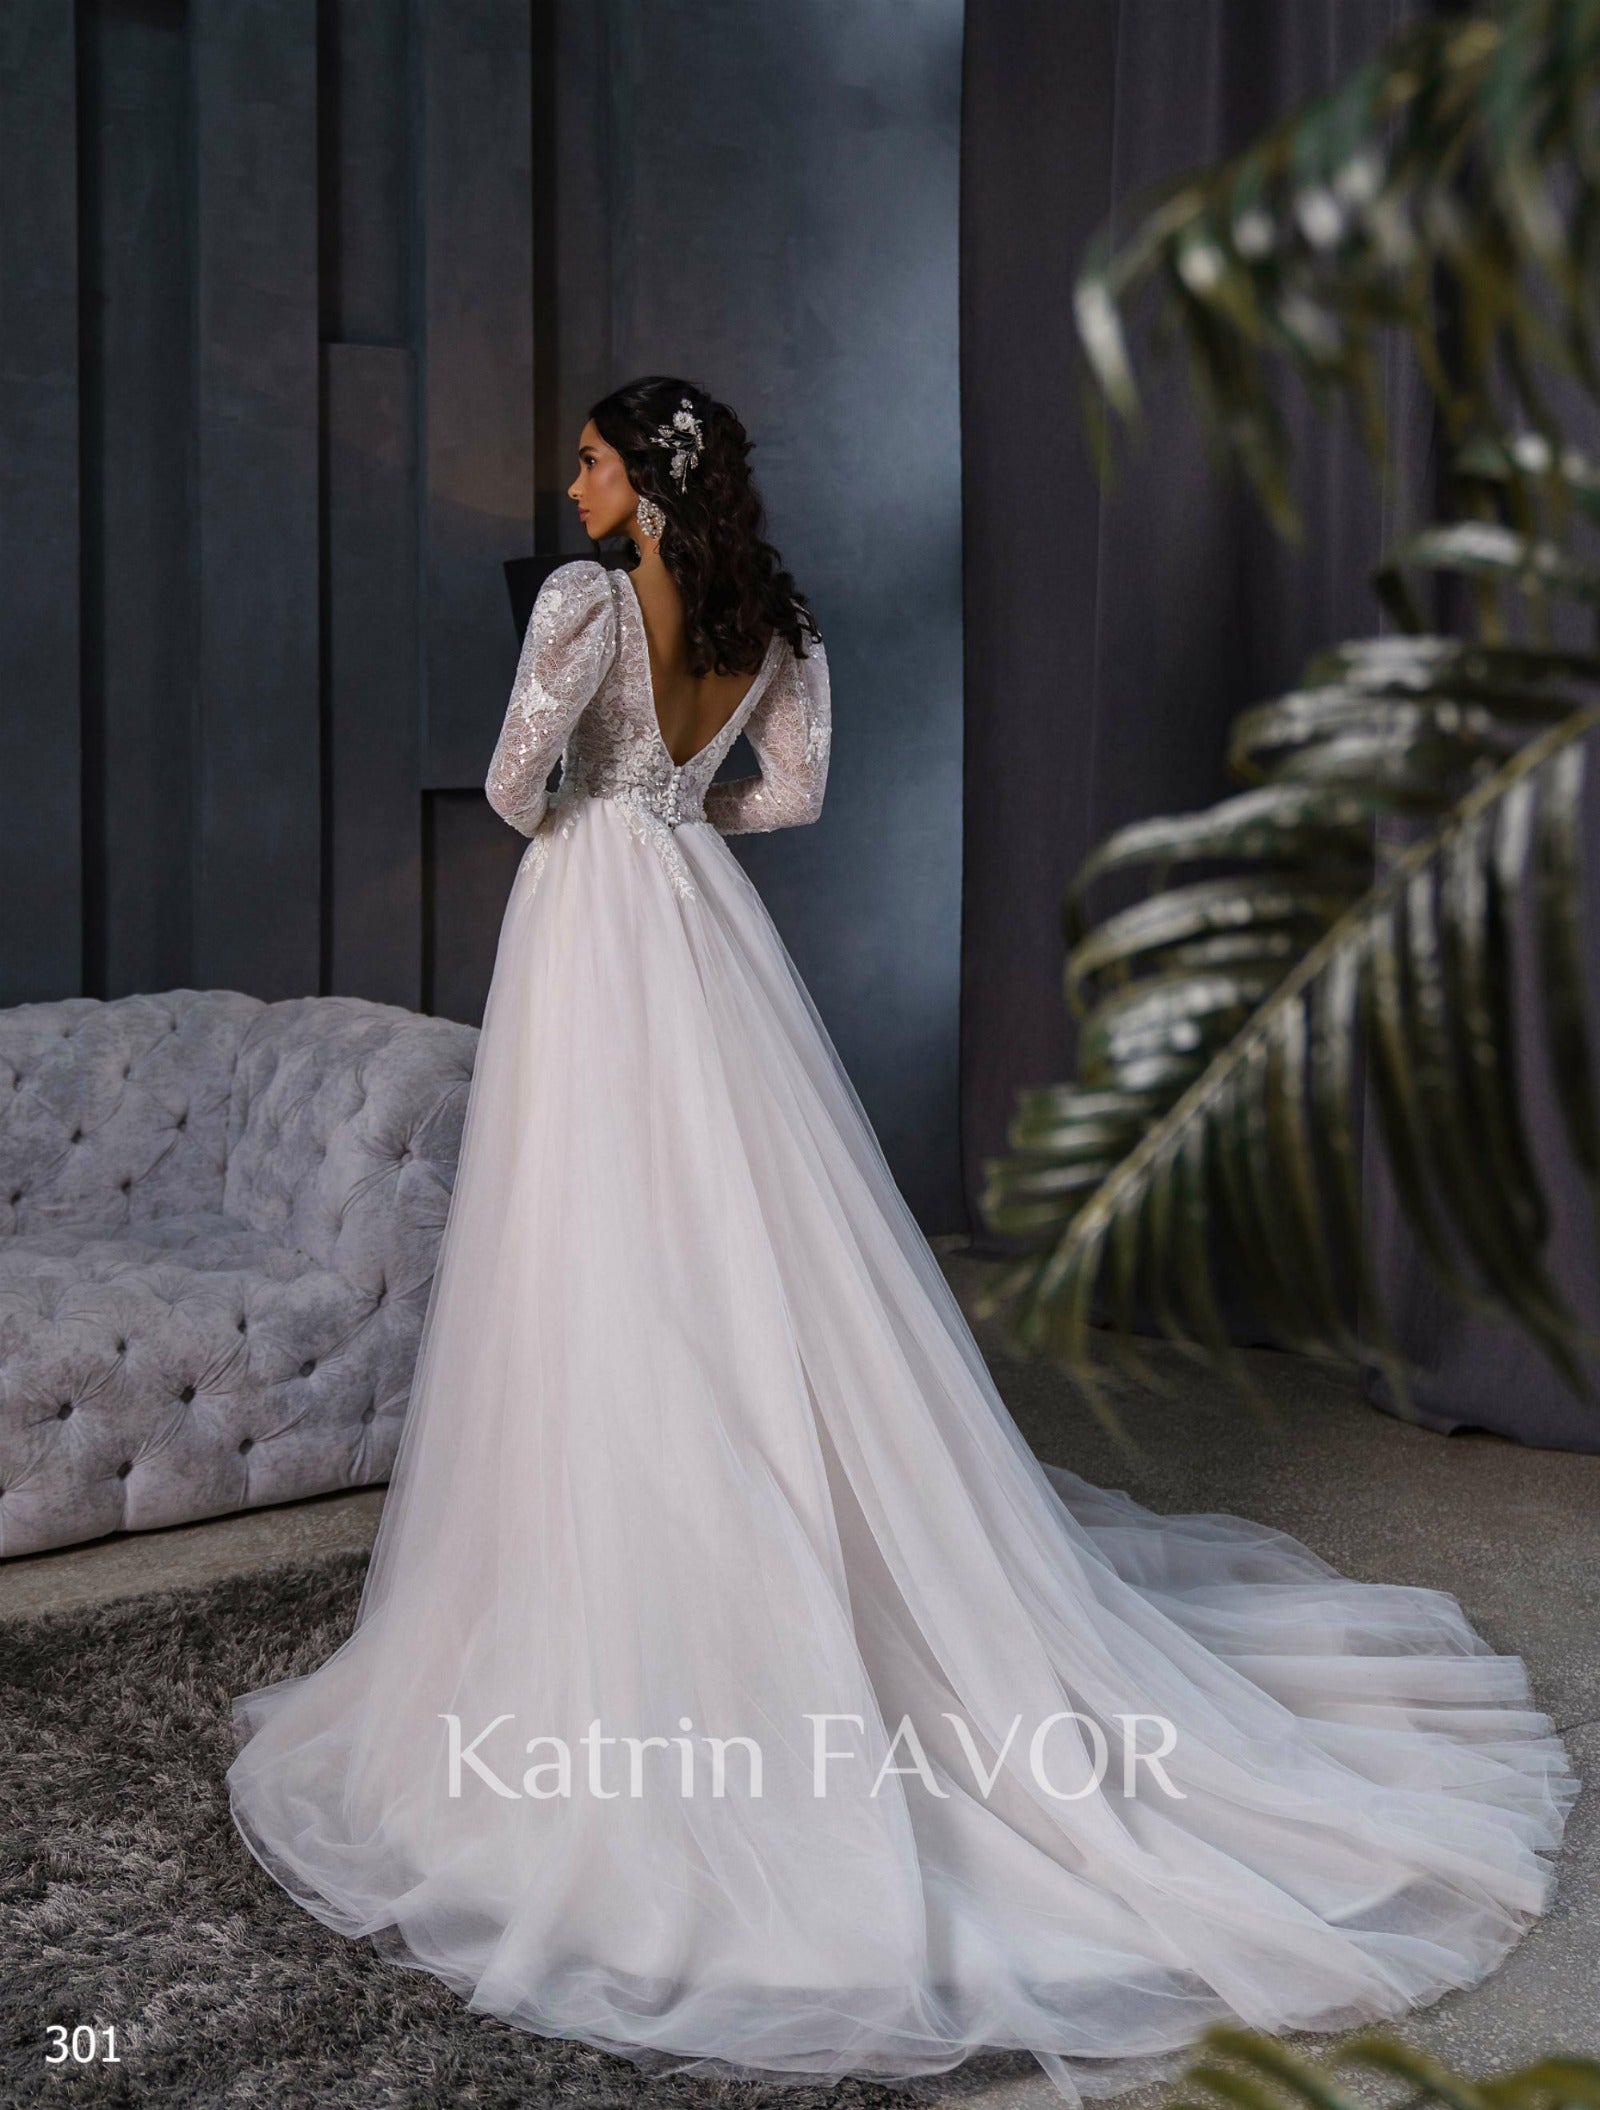 KatrinFAVORboutique-Fairy wedding dress long sleeve